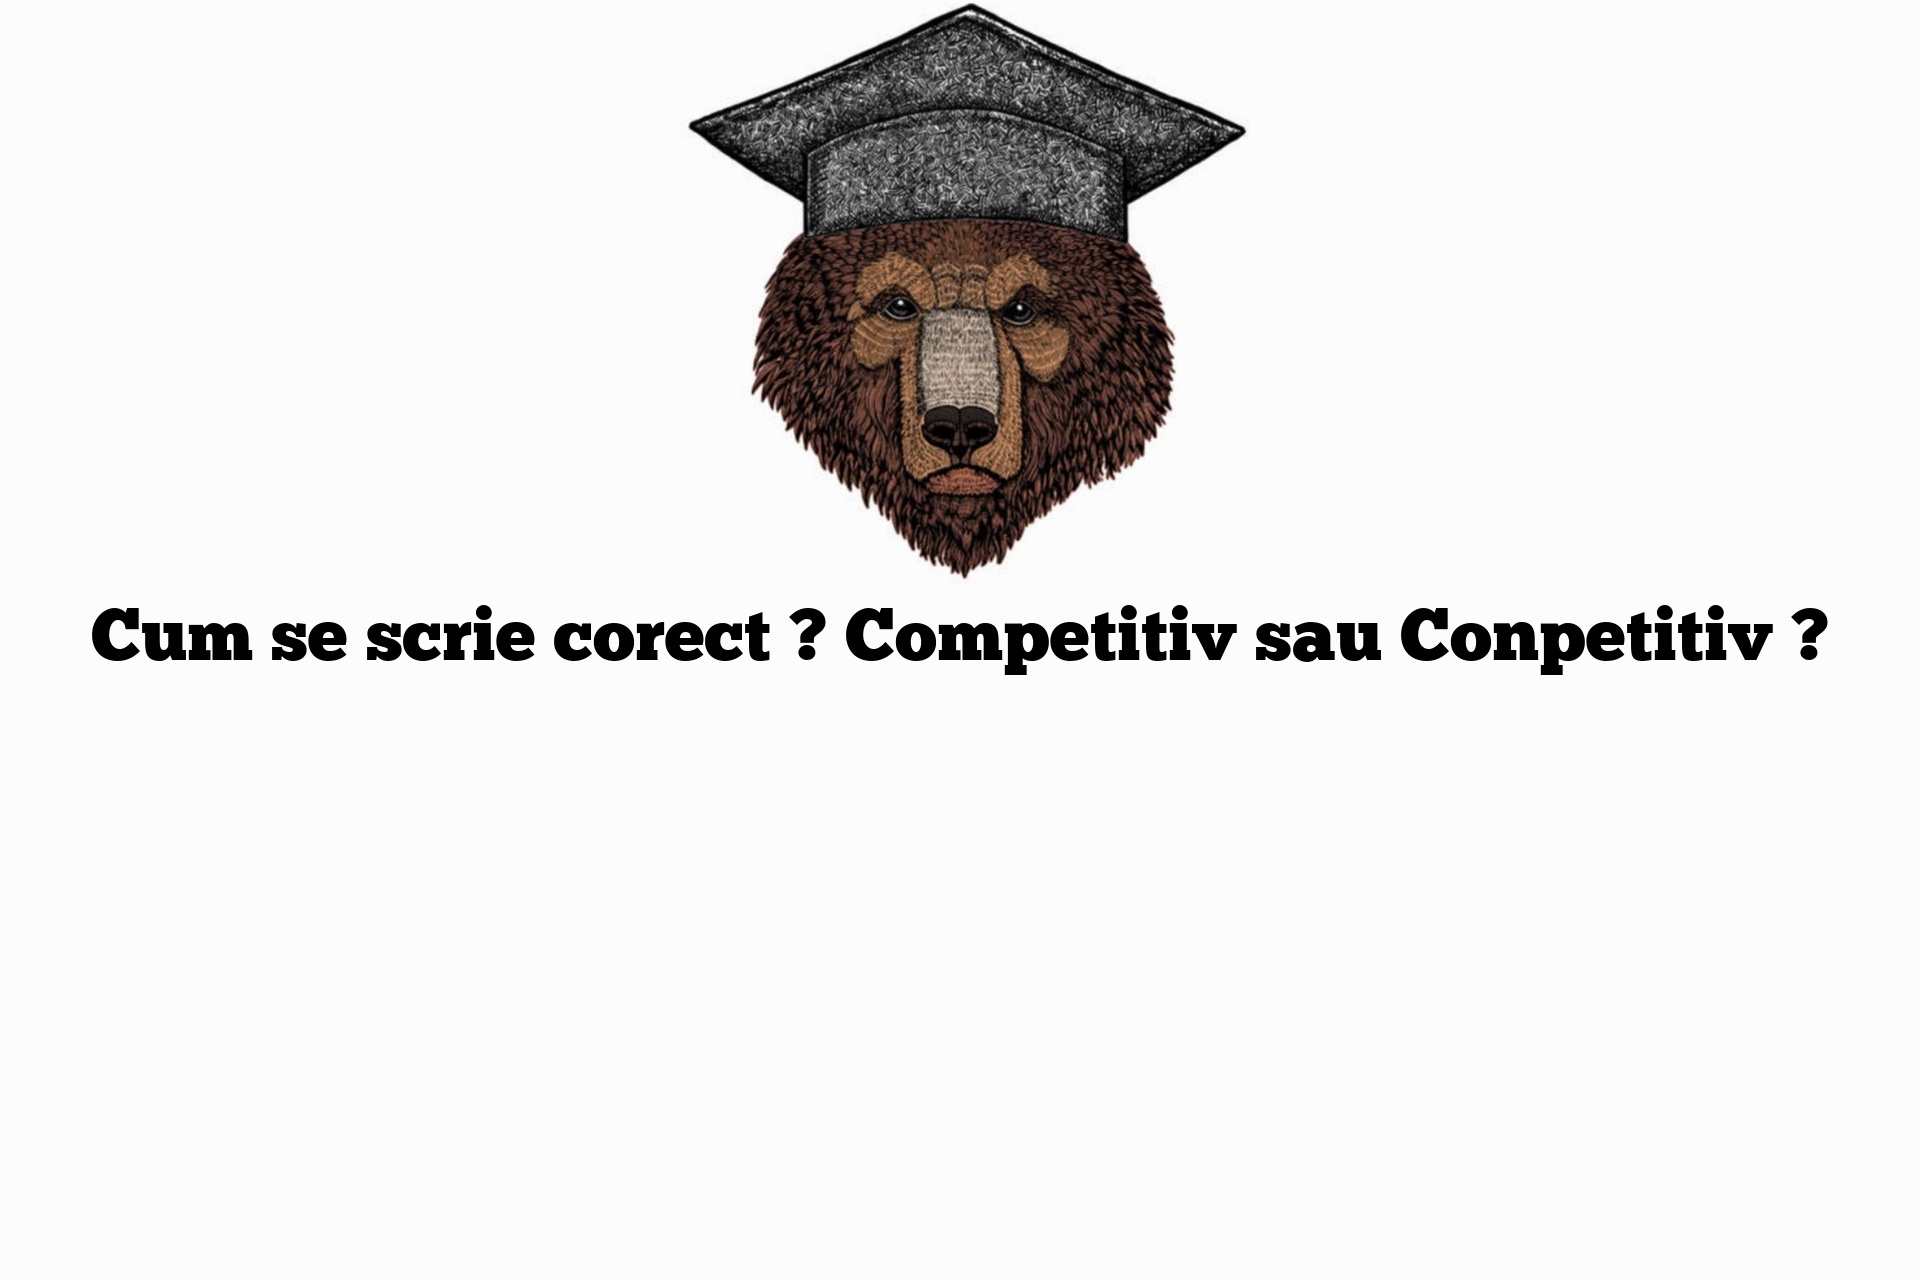 Cum se scrie corect ? Competitiv sau Conpetitiv ?